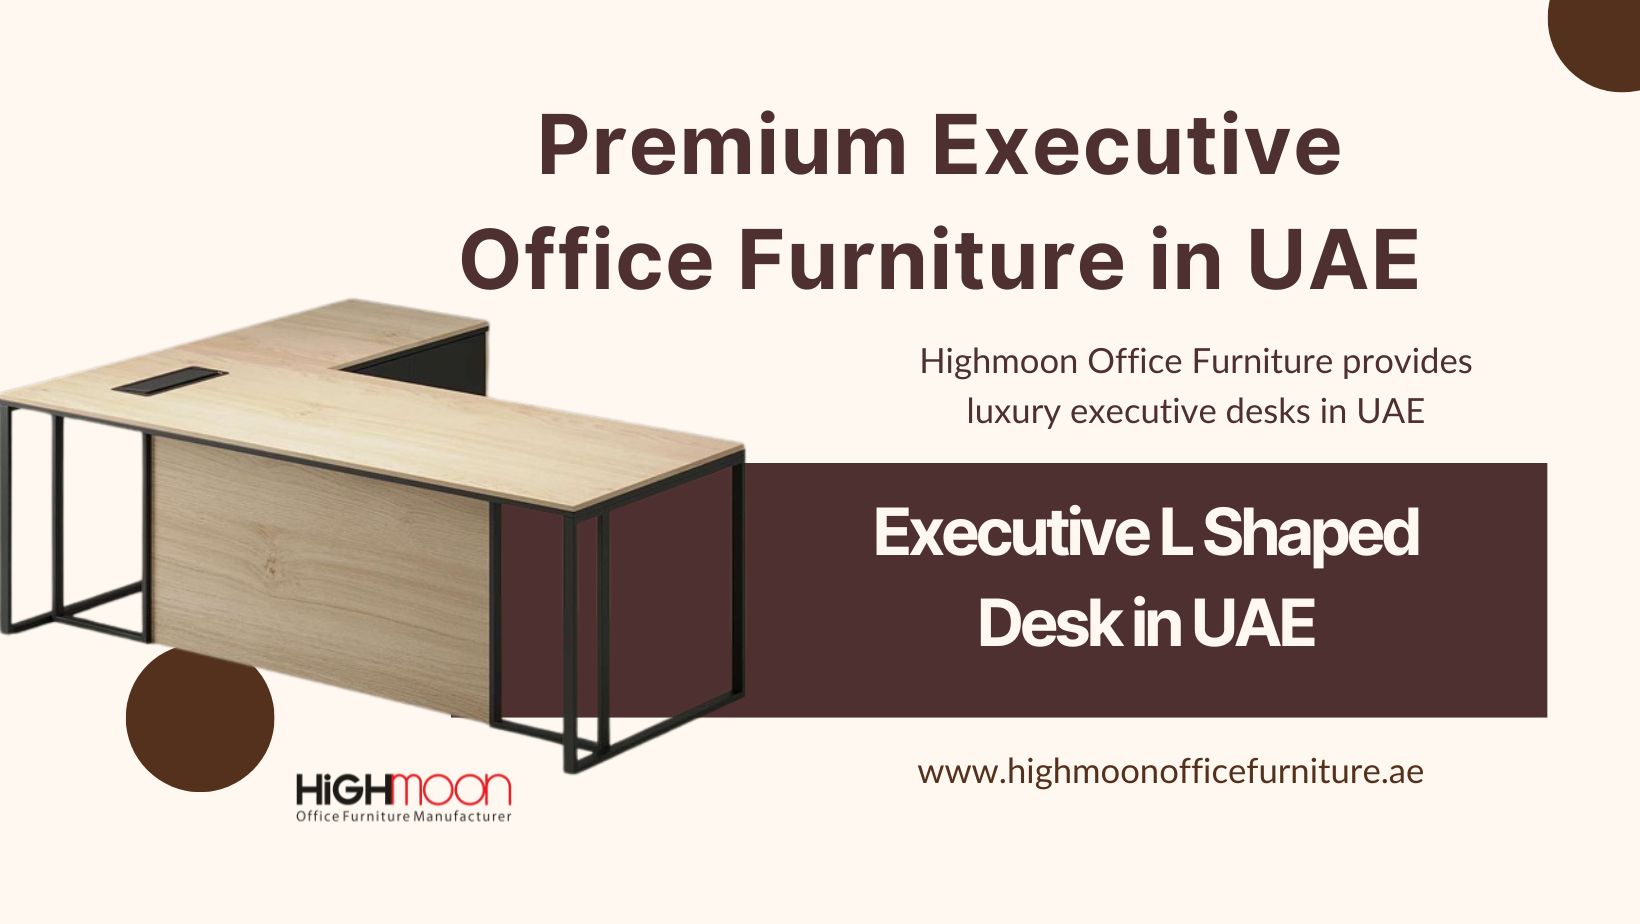 Executive L Shaped Desk in UAE